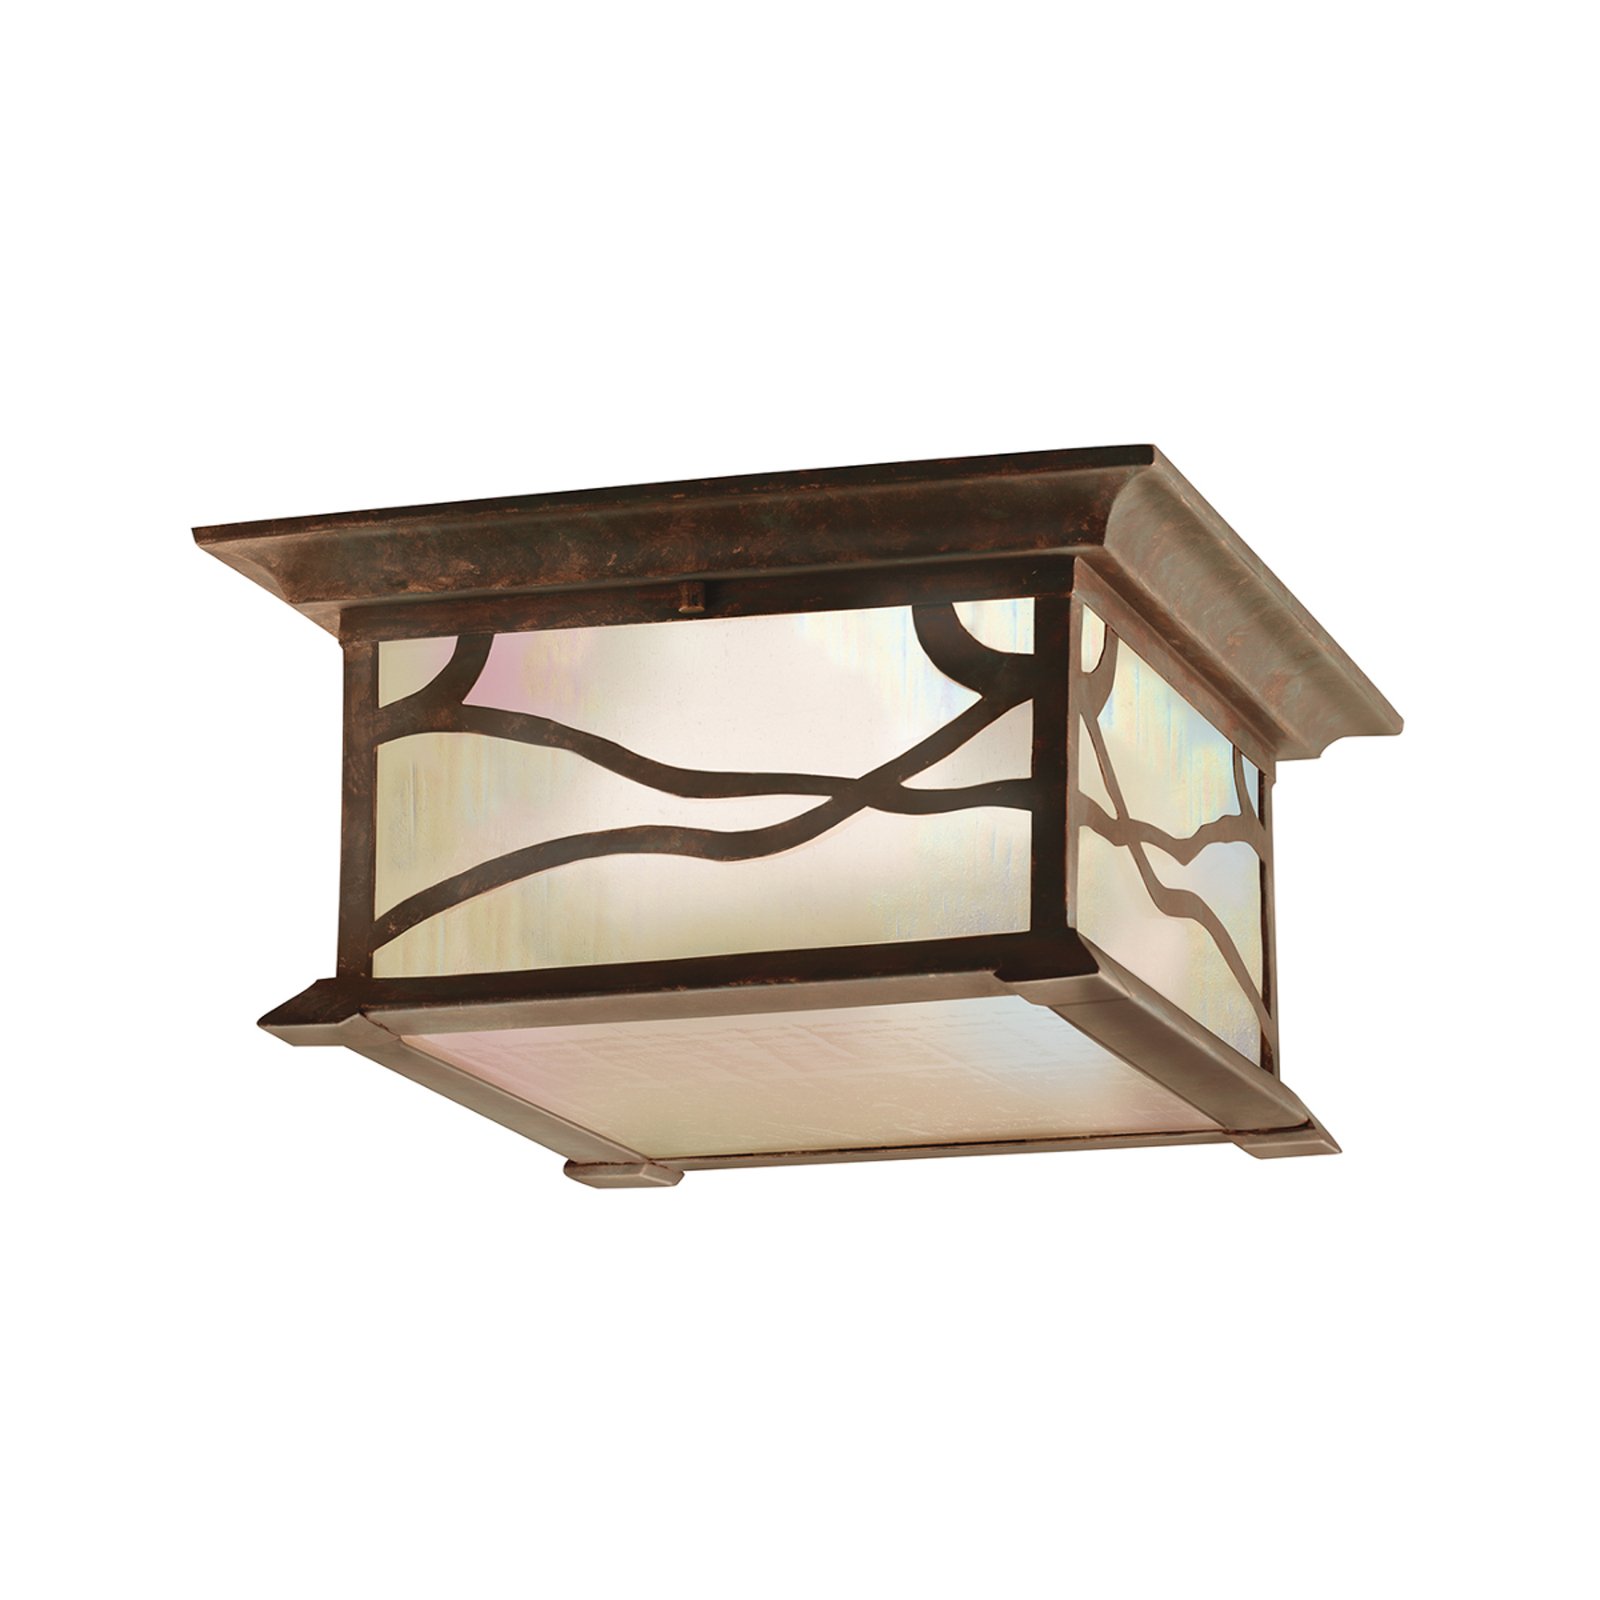 Morris outdoor ceiling light, copper